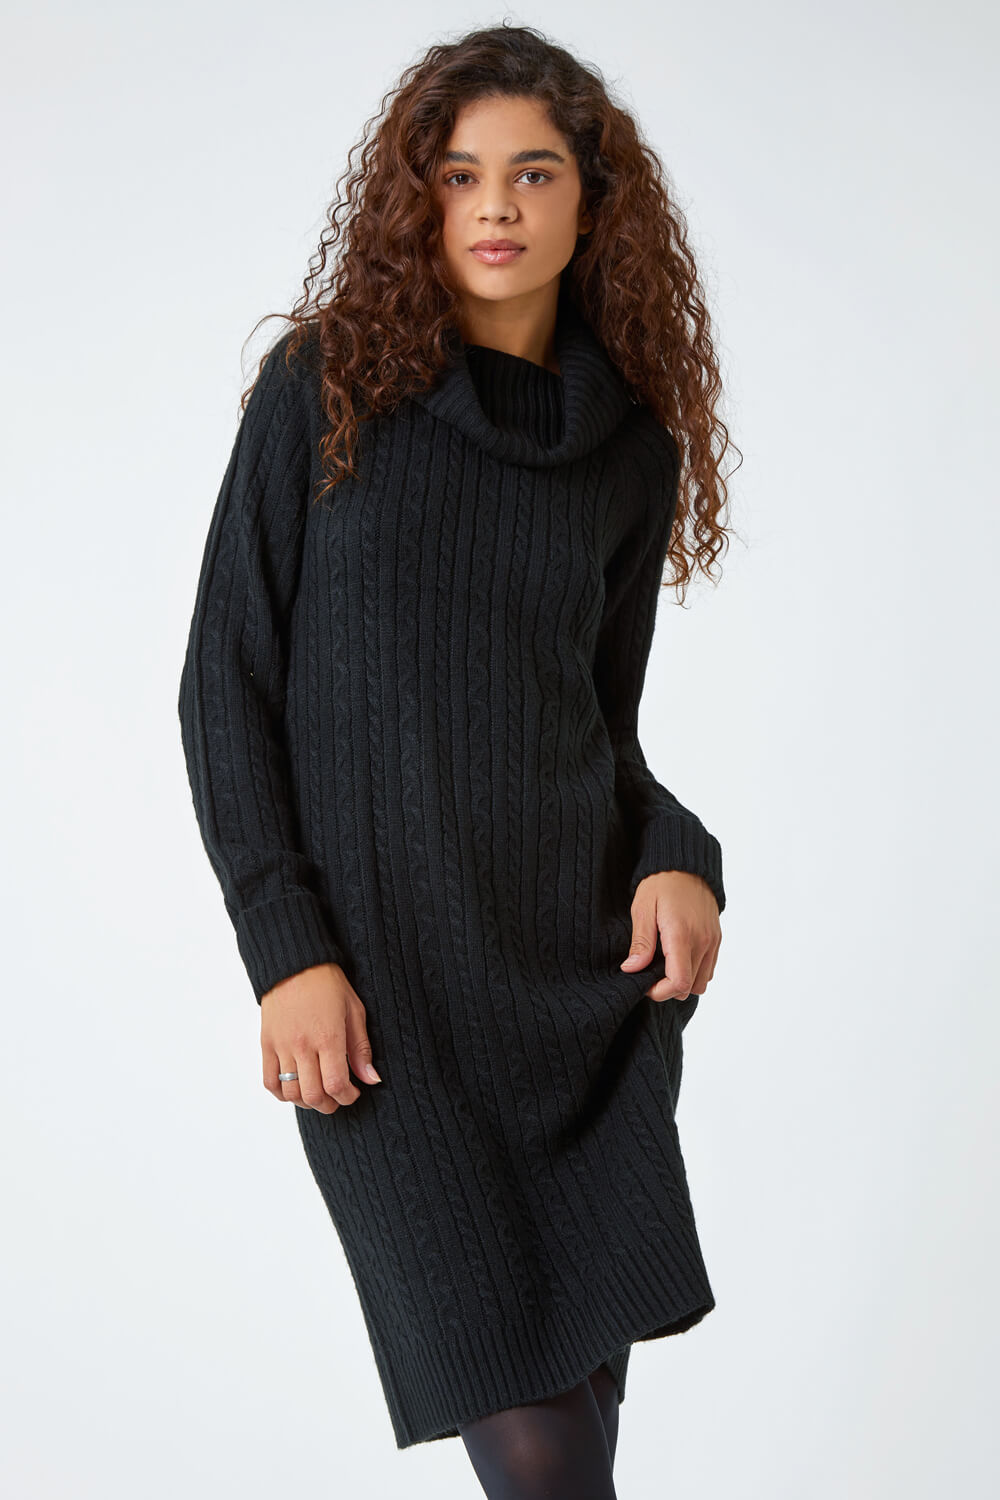 Black Roll Neck Knitted Jumper Dress | Roman UK